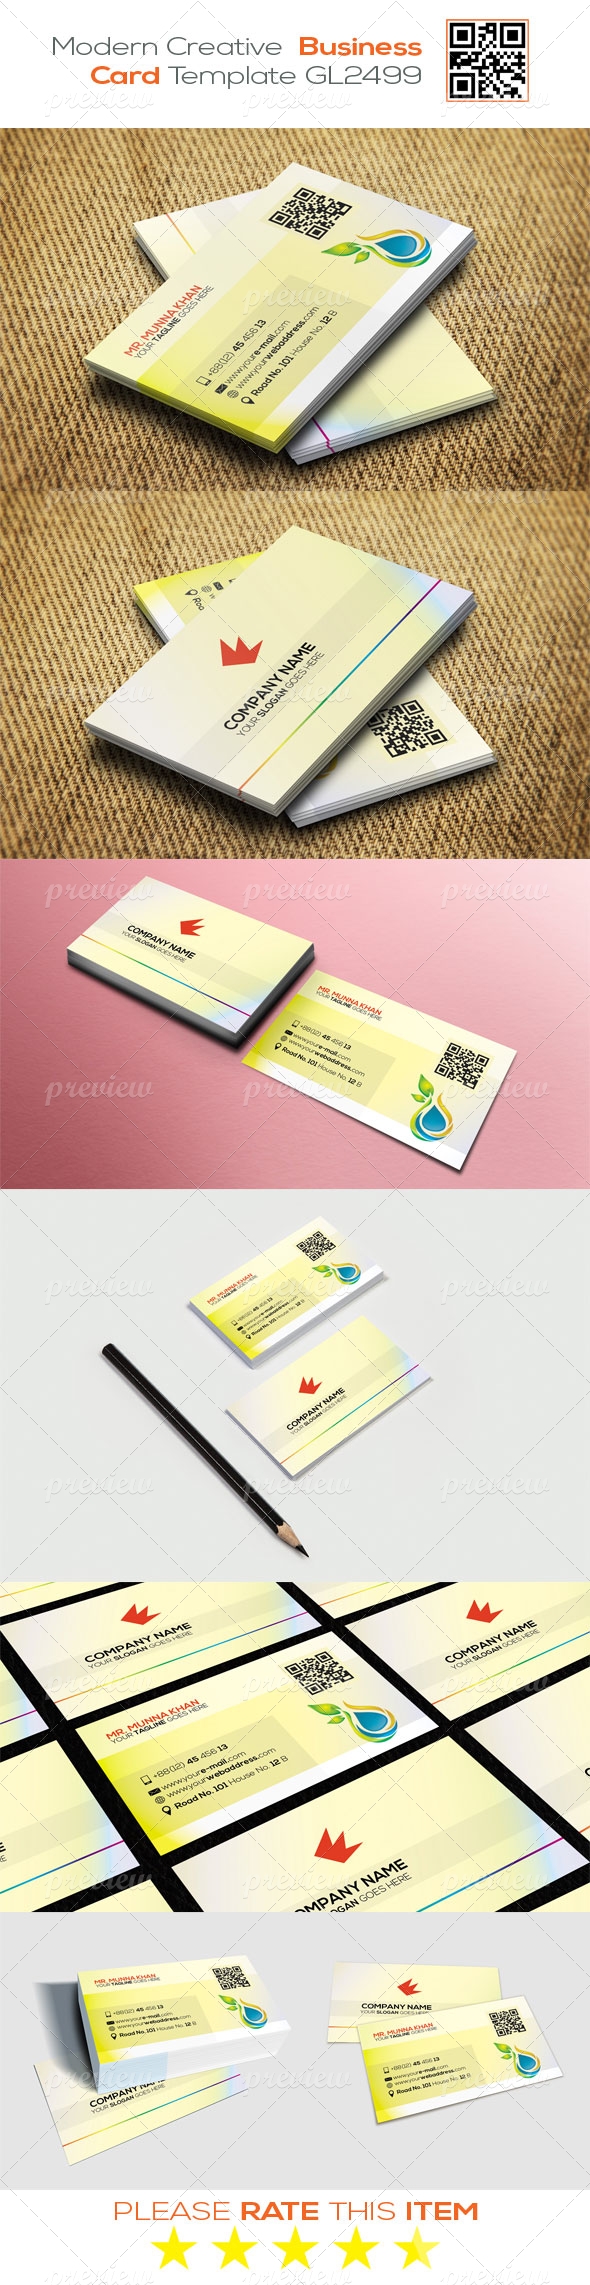 Modern Creative Business Card Template GL2499